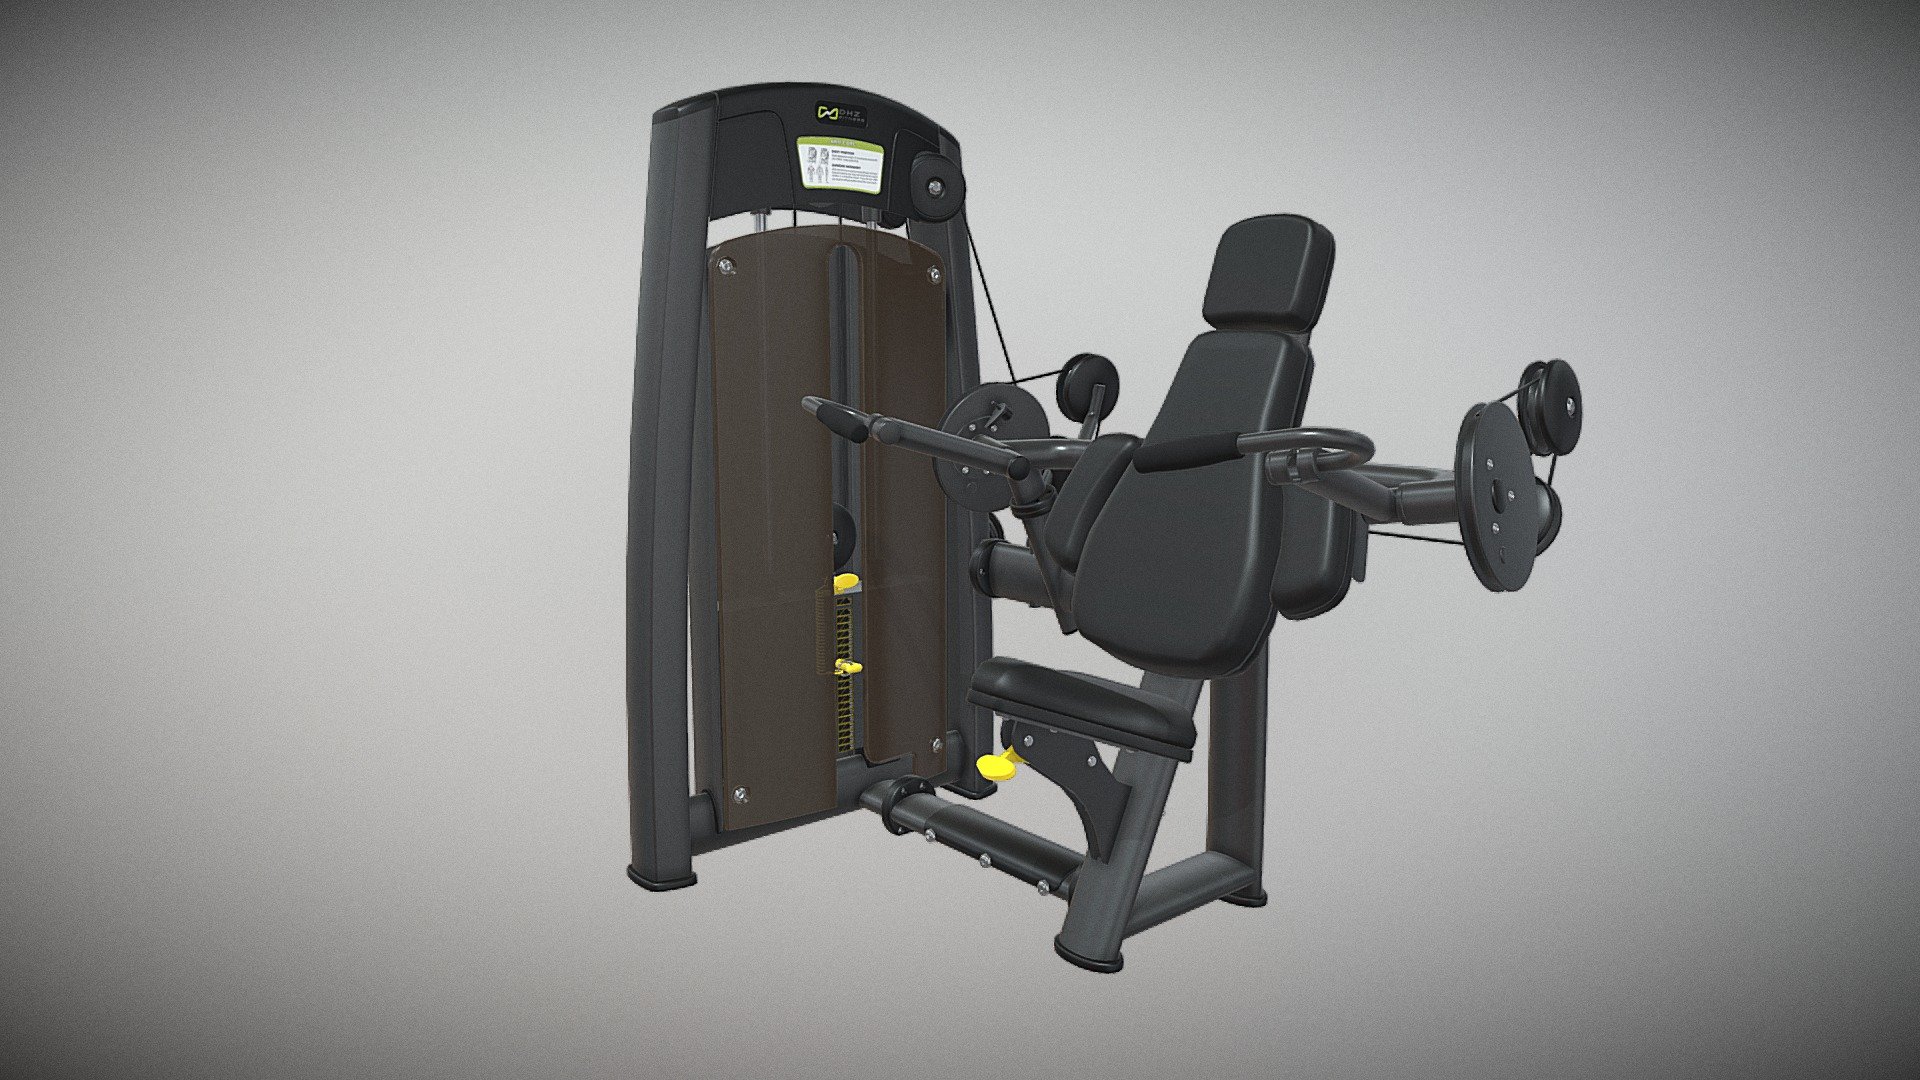 http://dhz-fitness.de/en/allant#A892 - BICEPS CURL - 3D model by supersport-fitness 3d model